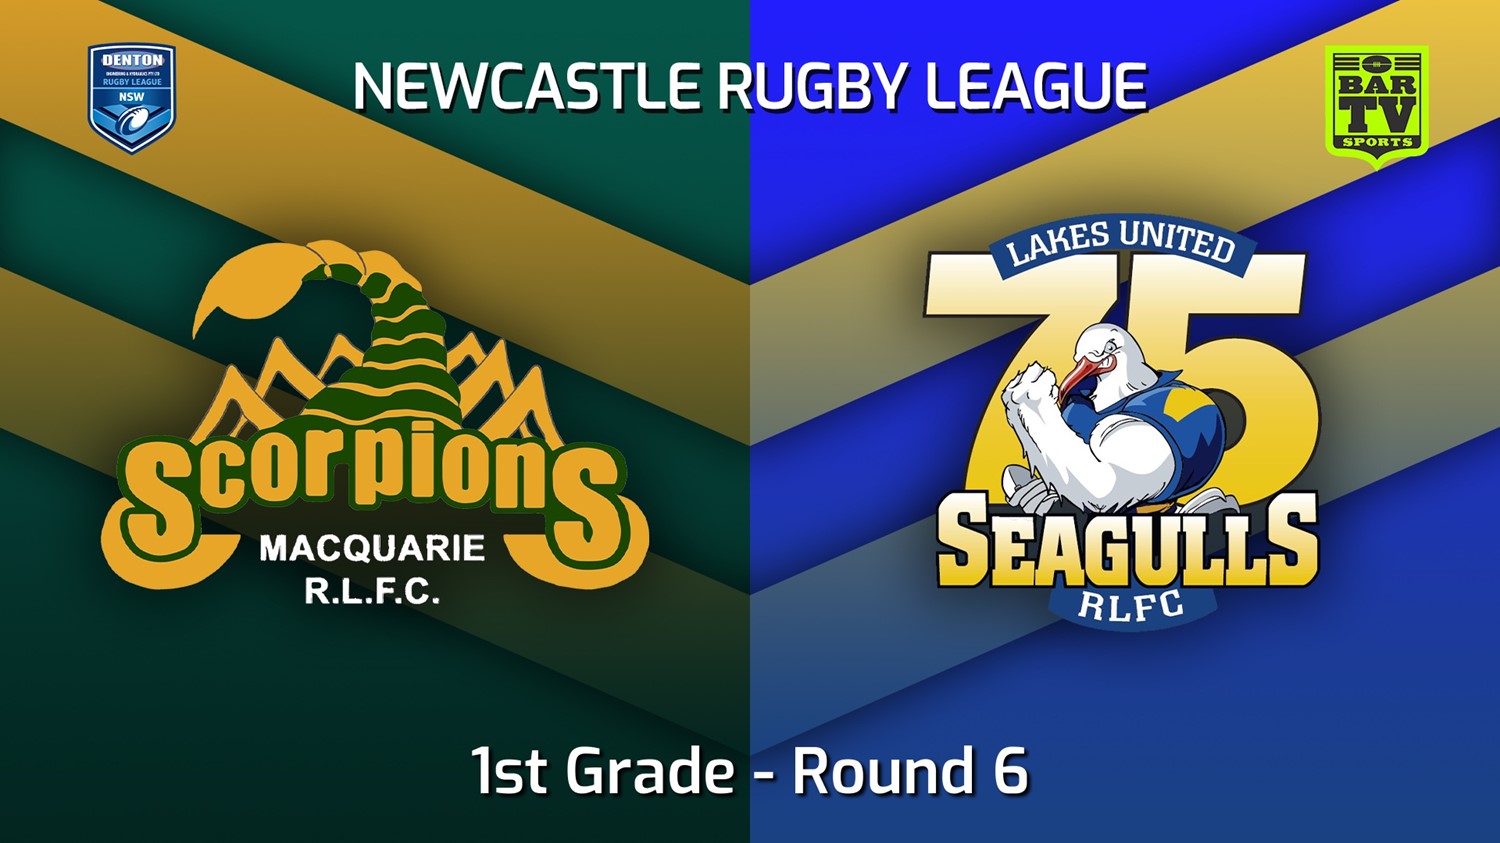 220430-Newcastle Round 6 - 1st Grade - Macquarie Scorpions v Lakes United Slate Image